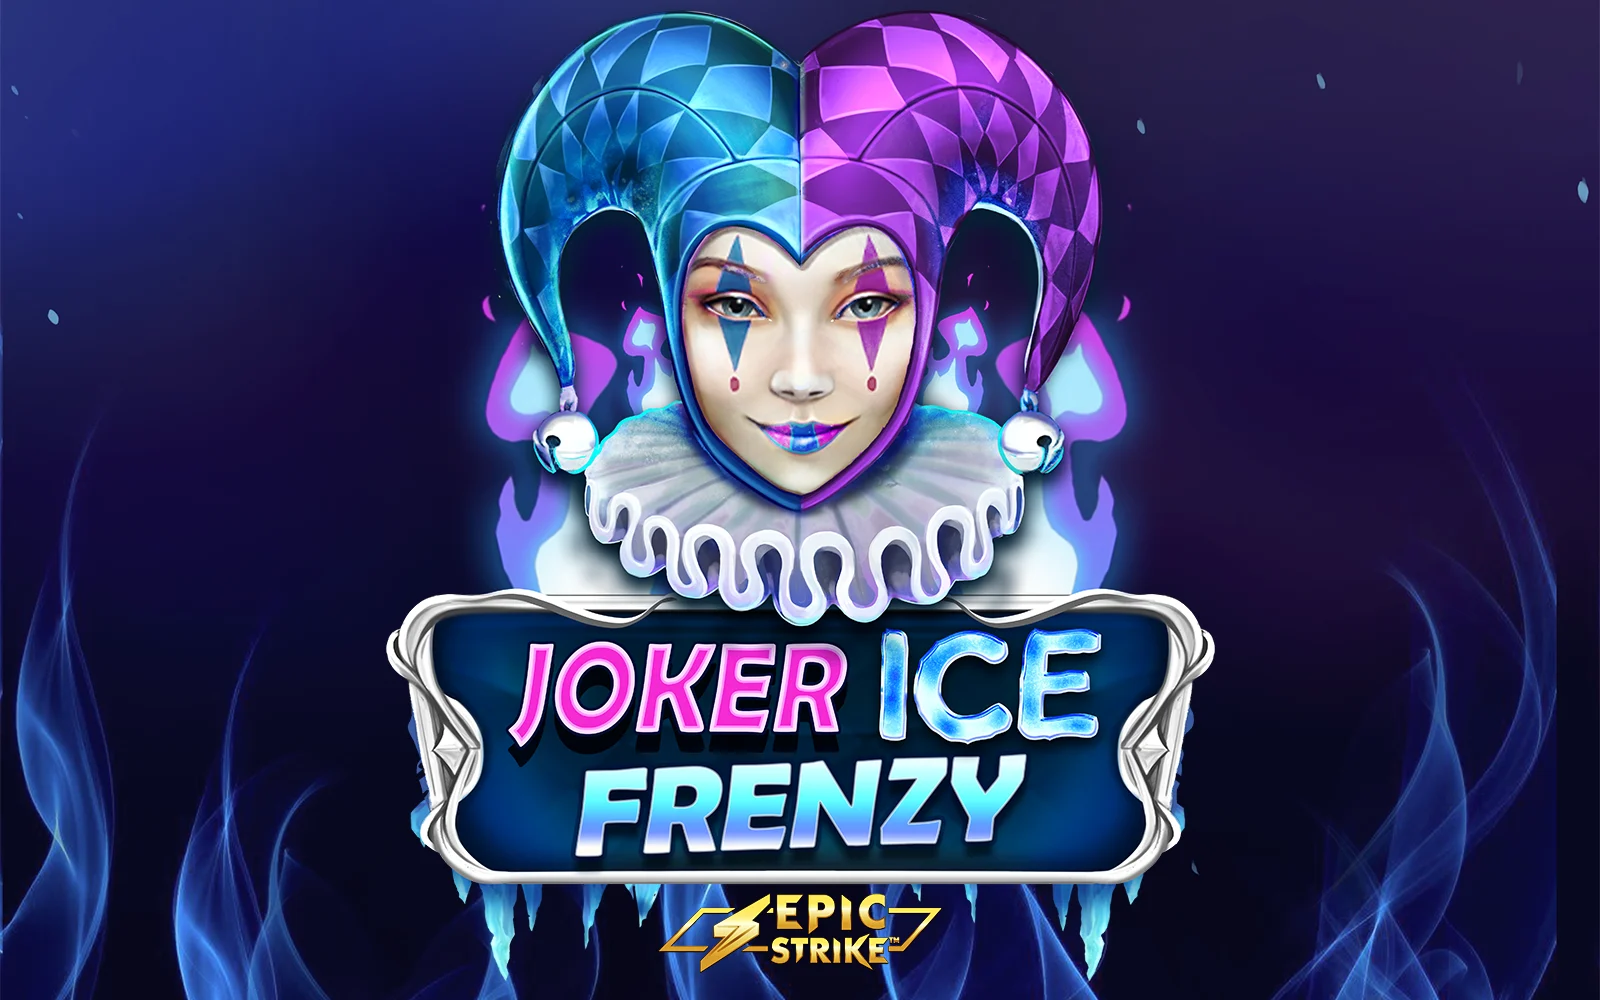 Gioca a Joker Ice Frenzy Epic Strike™ sul casino online Starcasino.be